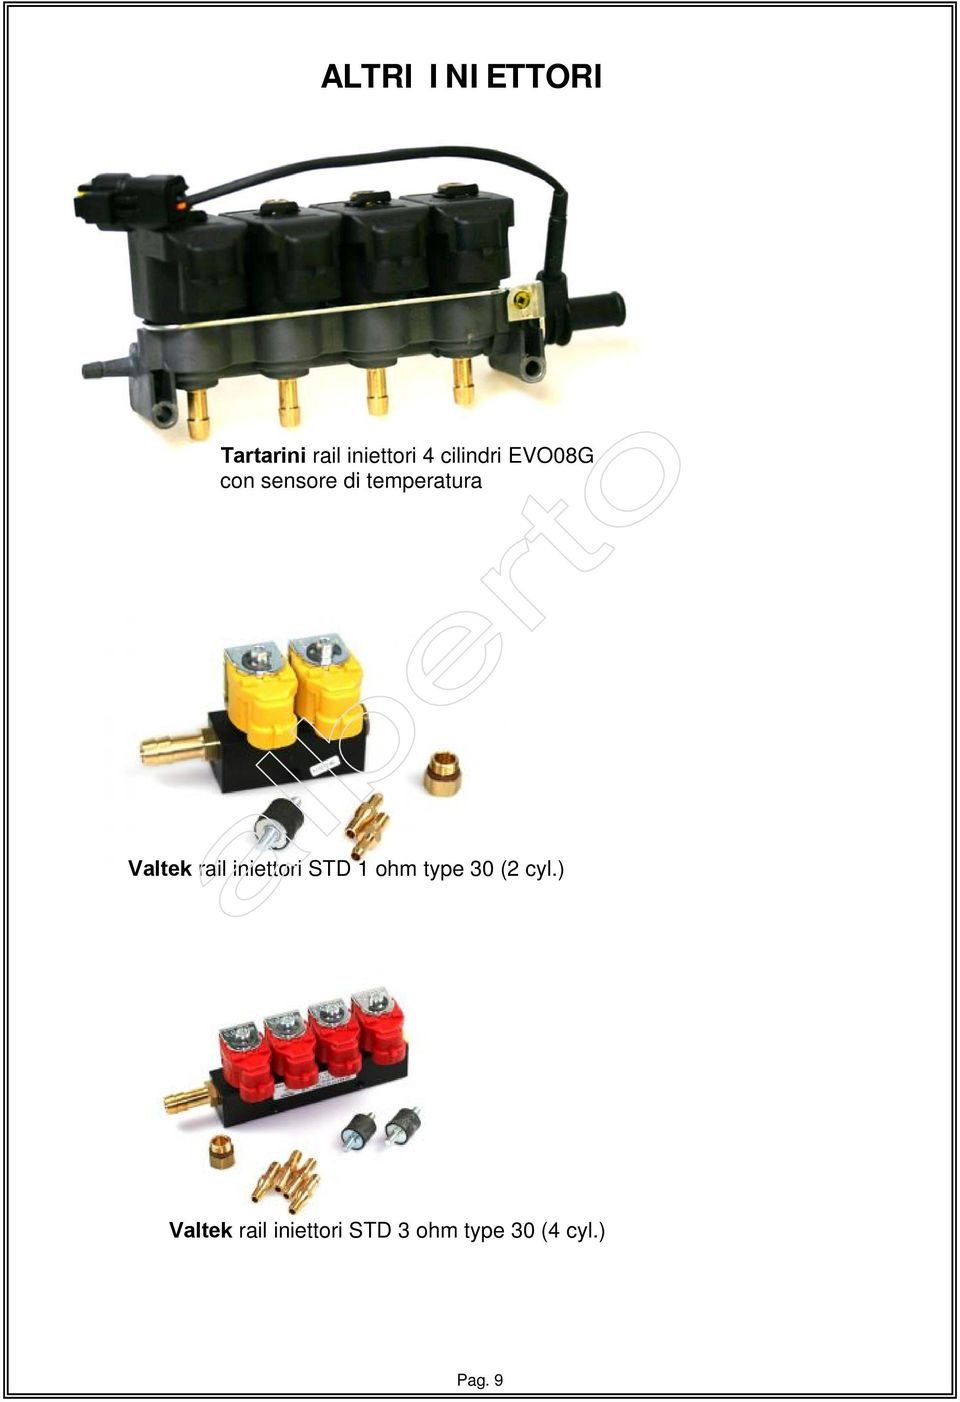 Valtek rail iniettori STD 1 ohm type 30 (2 cyl.